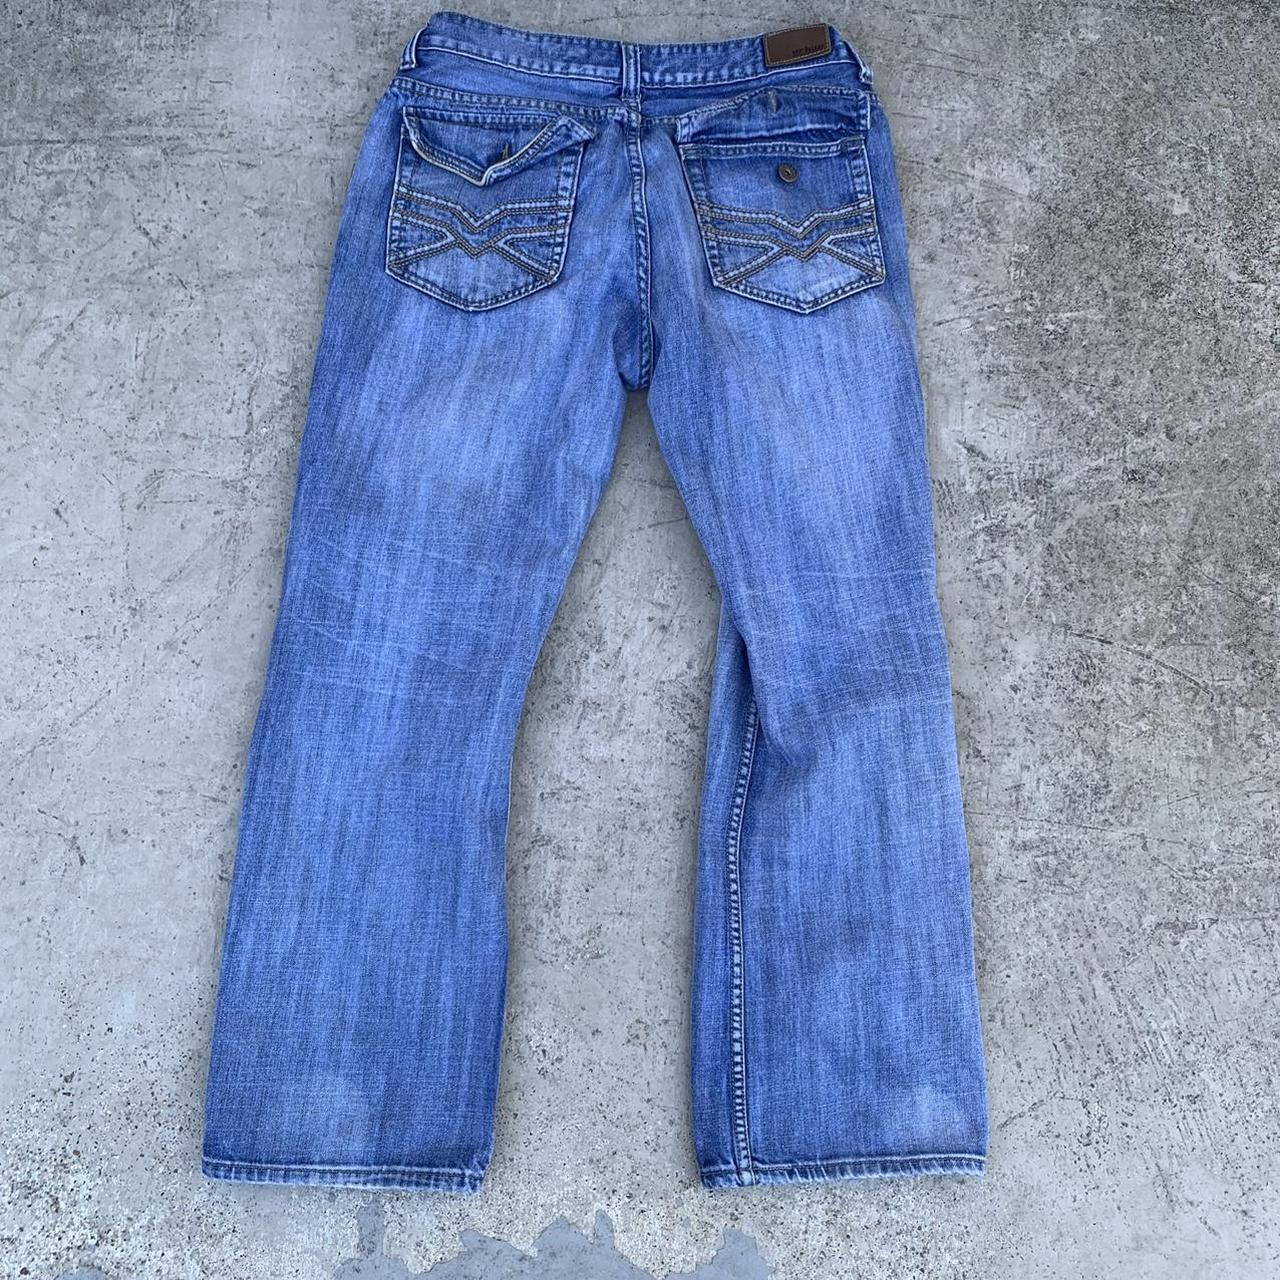 Urban up bootcut pants 32x30 Clean jeans - Depop